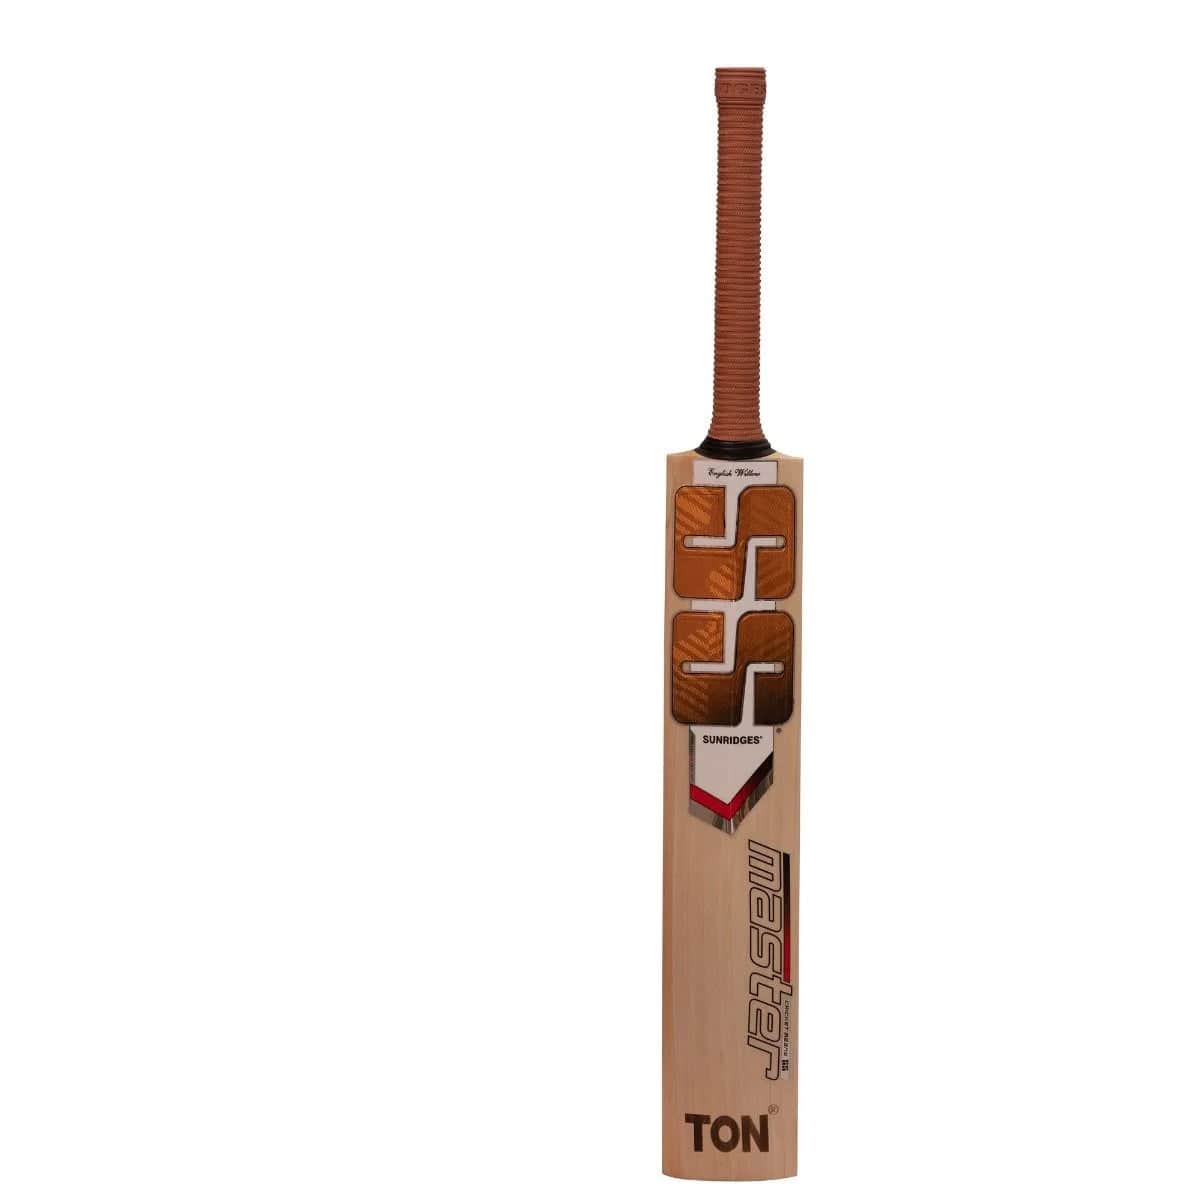 SS Cricket Bats Short Hand / 2'8 SS Master 2000 Adult Cricket Bat